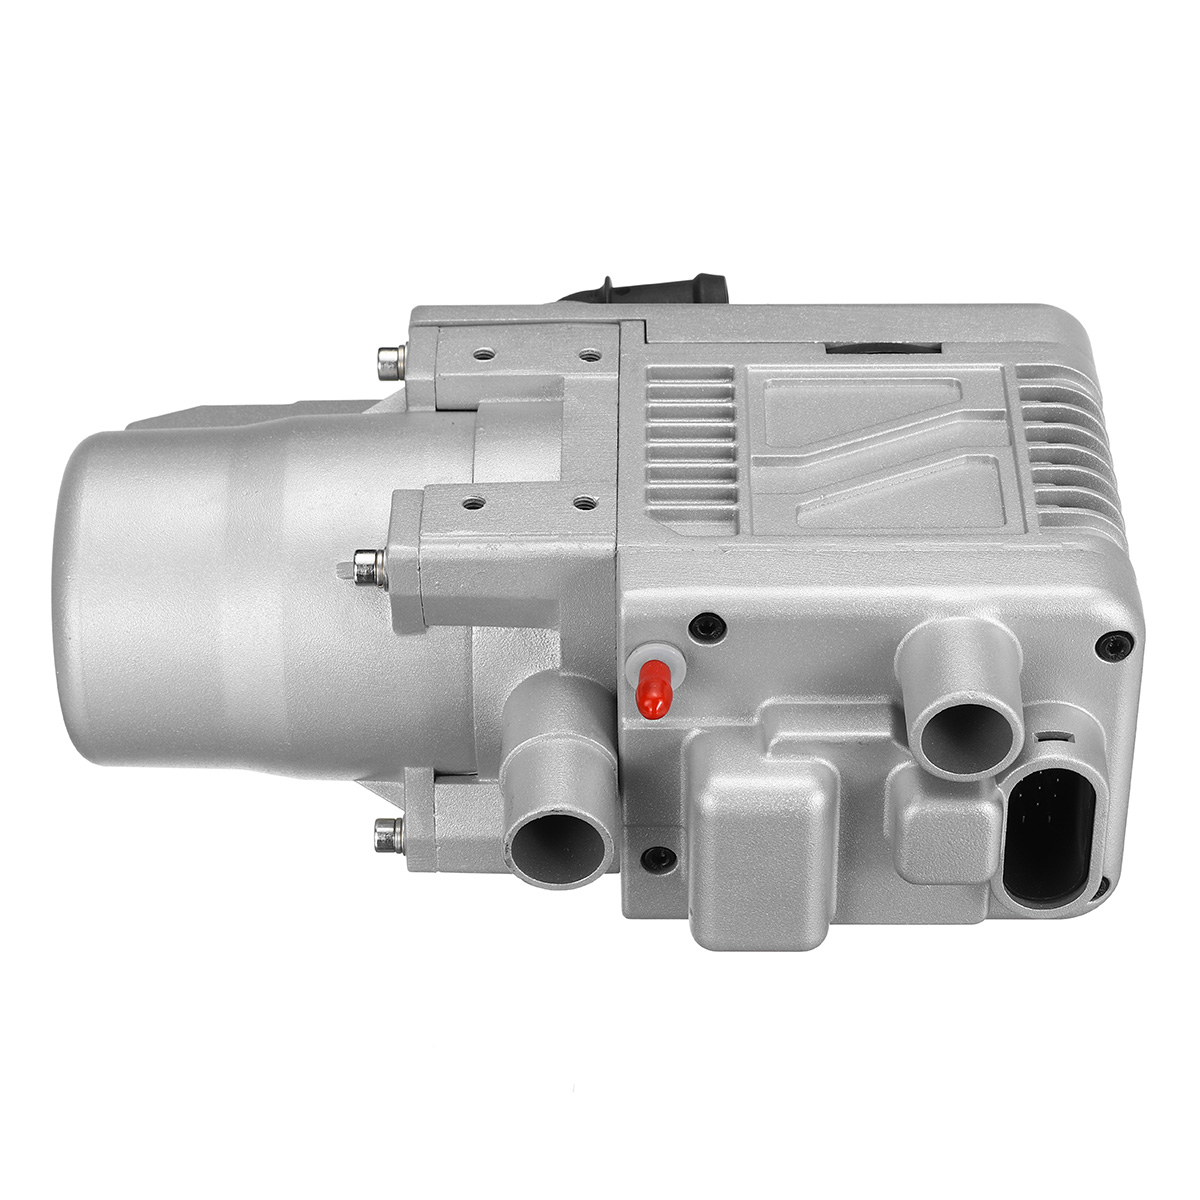 12V 5KW Plumbing Water Heater Kit - Auto GoShop